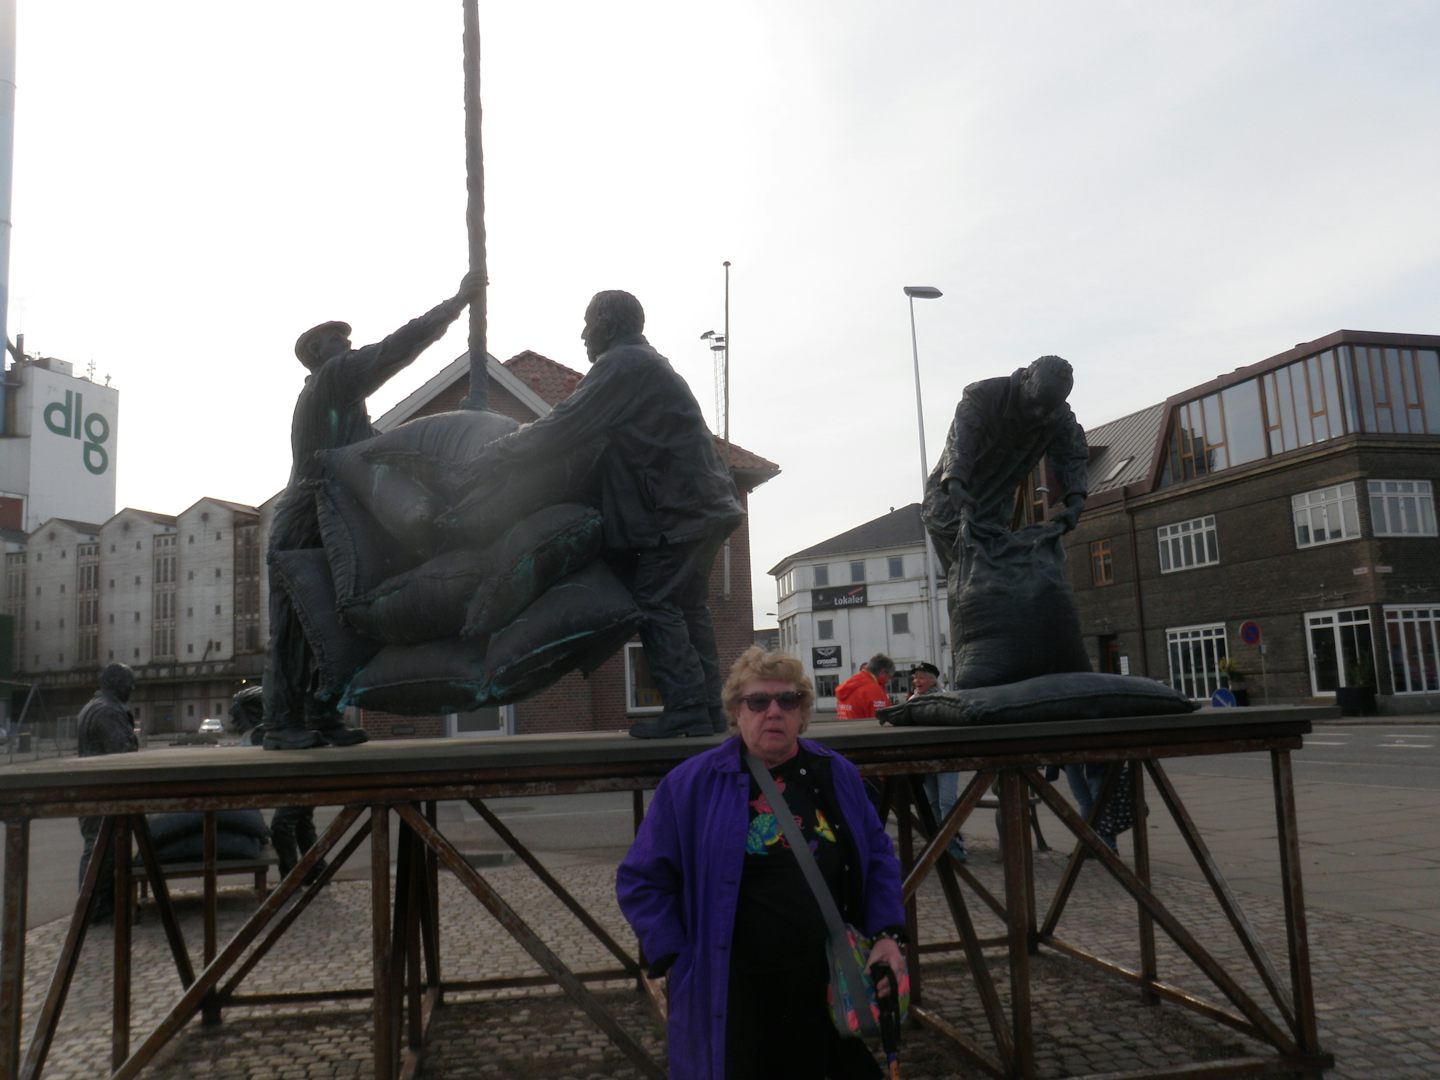 sculpture representing cultural workers in Aarhus Denmark